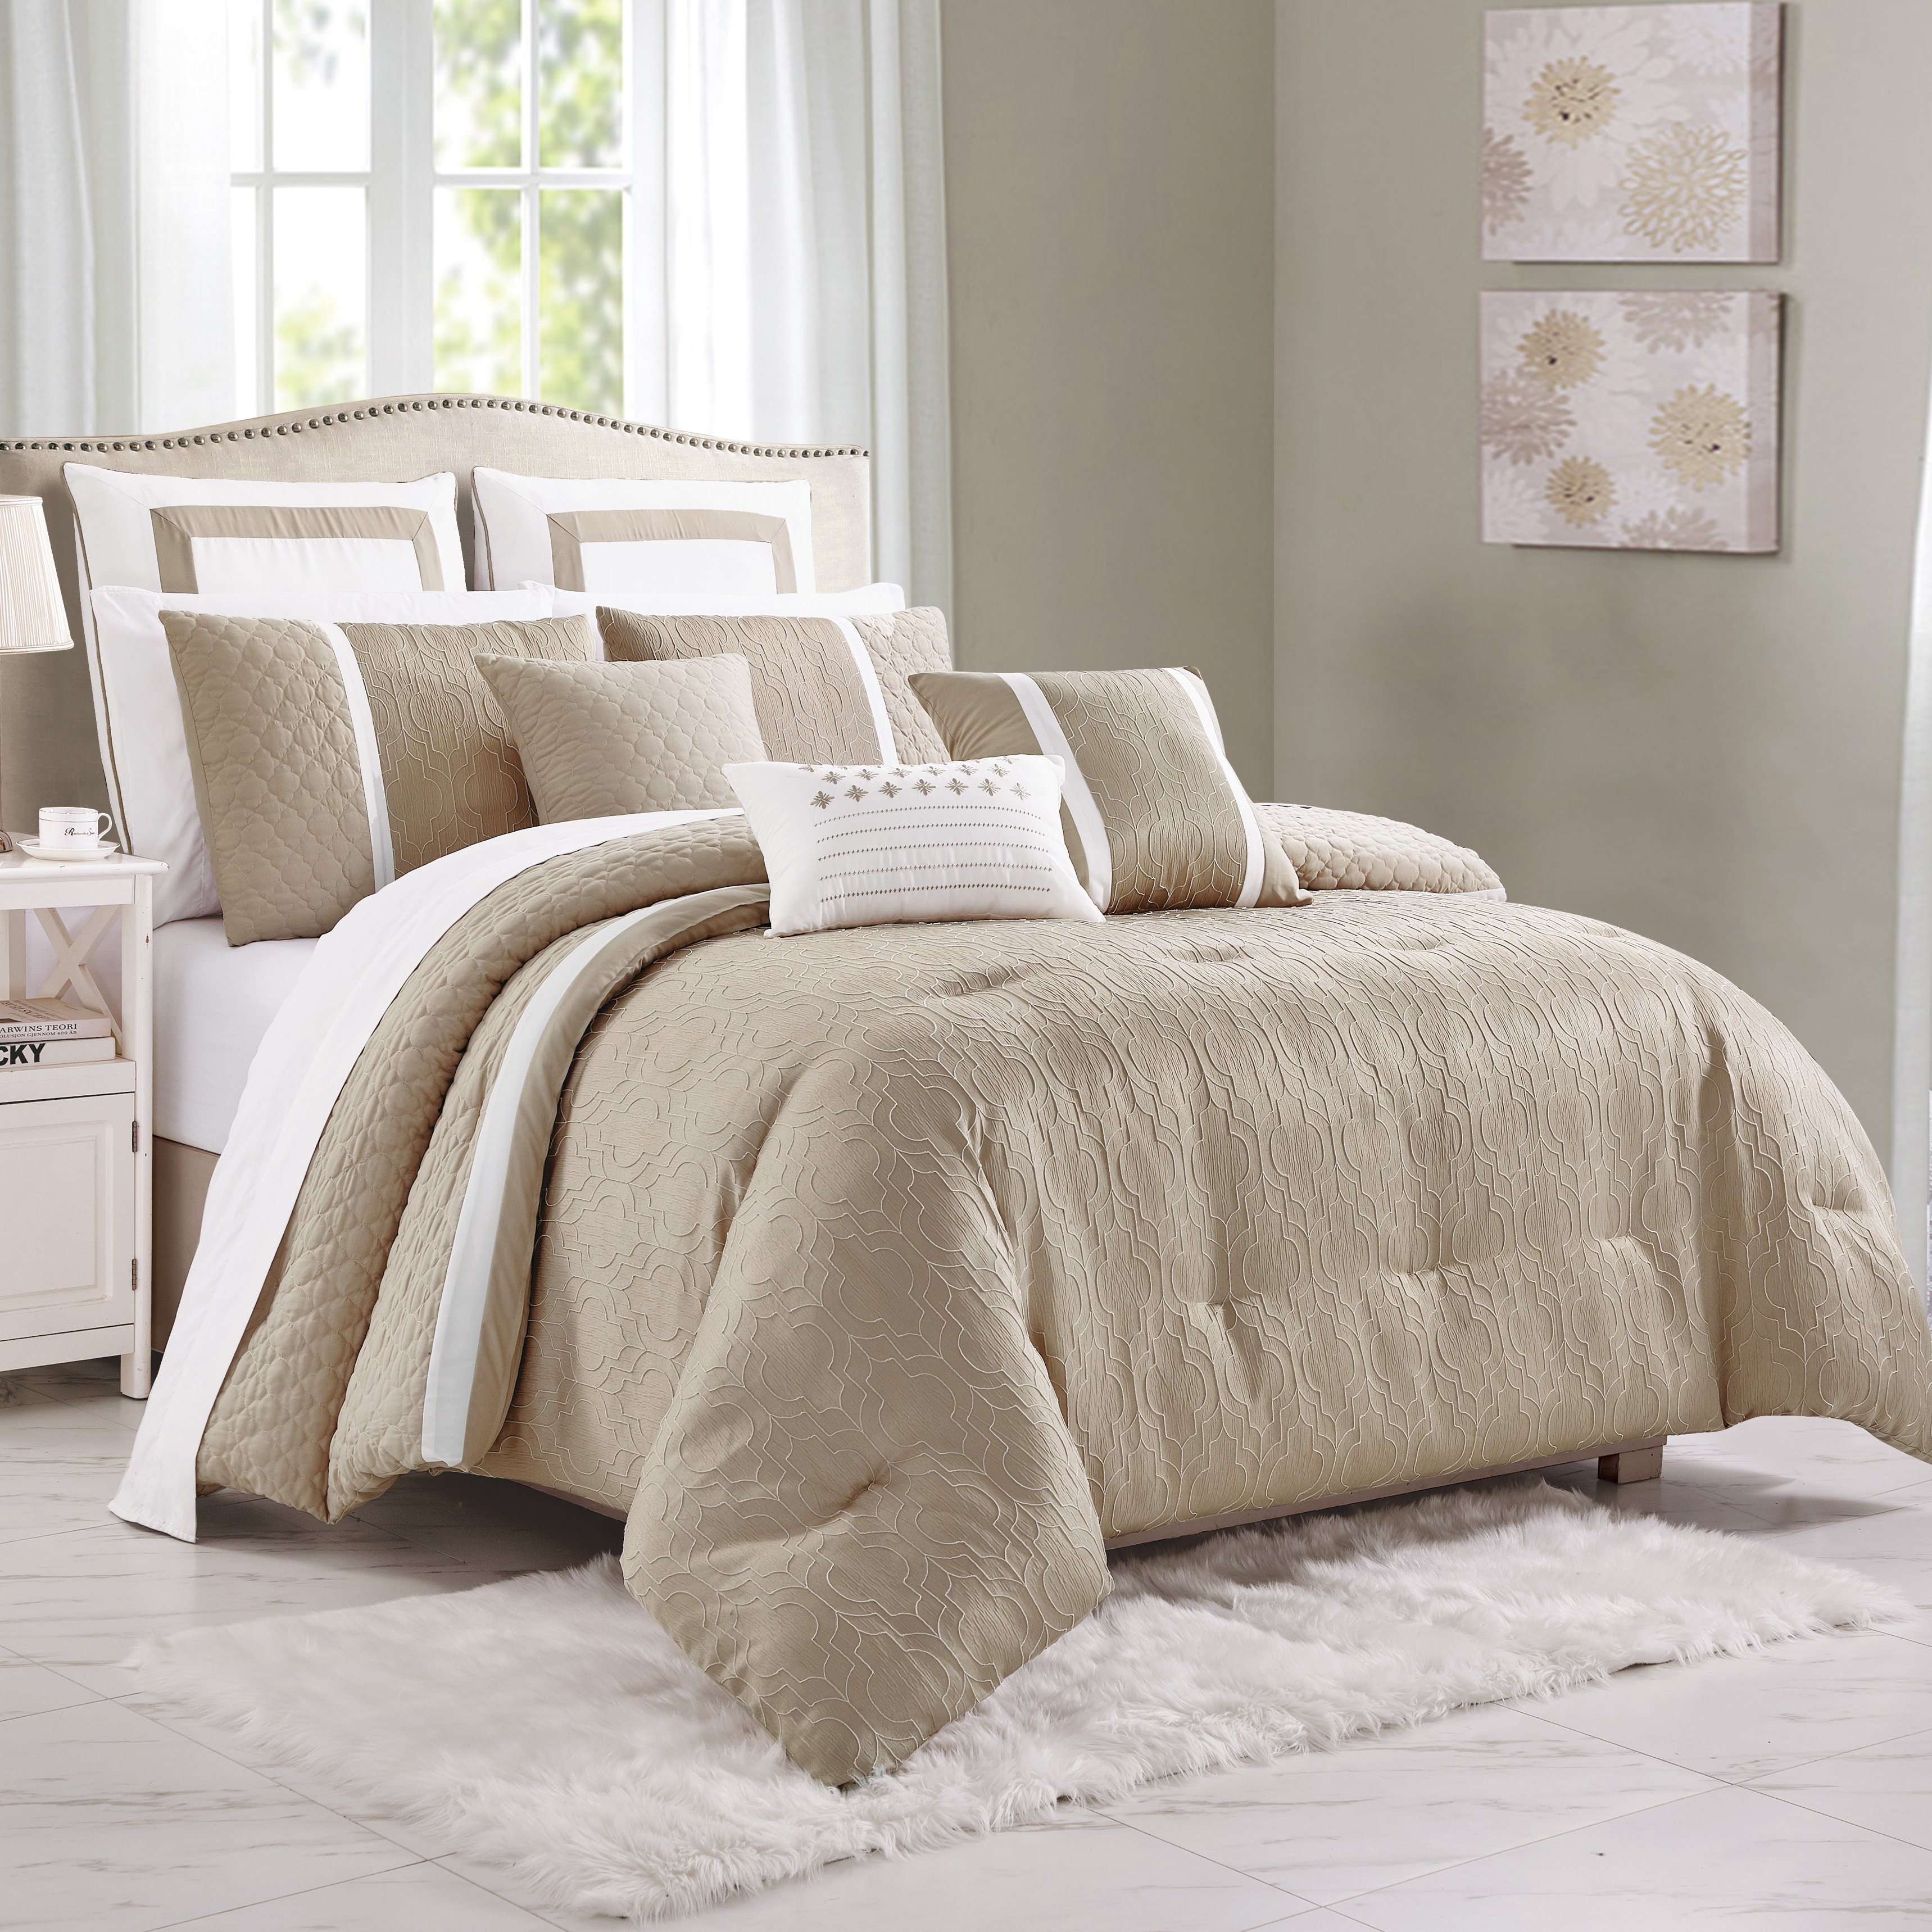 Arlow 8 Piece Comforter Set Jacquard Geometric Quilted Pattern Design Bedding - Beige, Queen